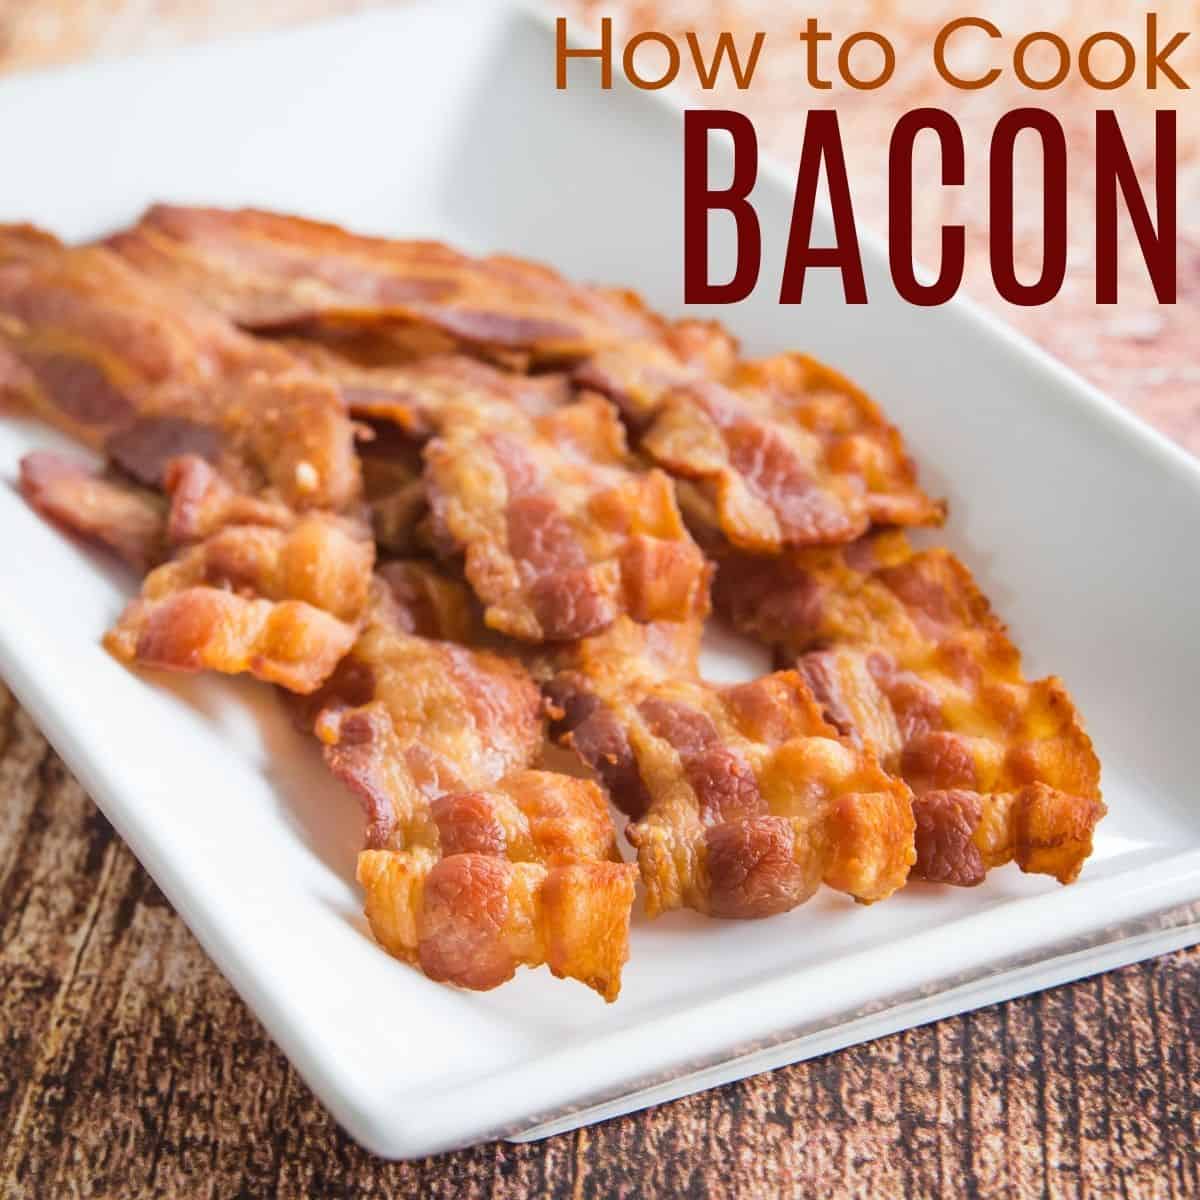 https://cupcakesandkalechips.com/wp-content/uploads/2021/06/How-to-Make-Bacon.jpeg